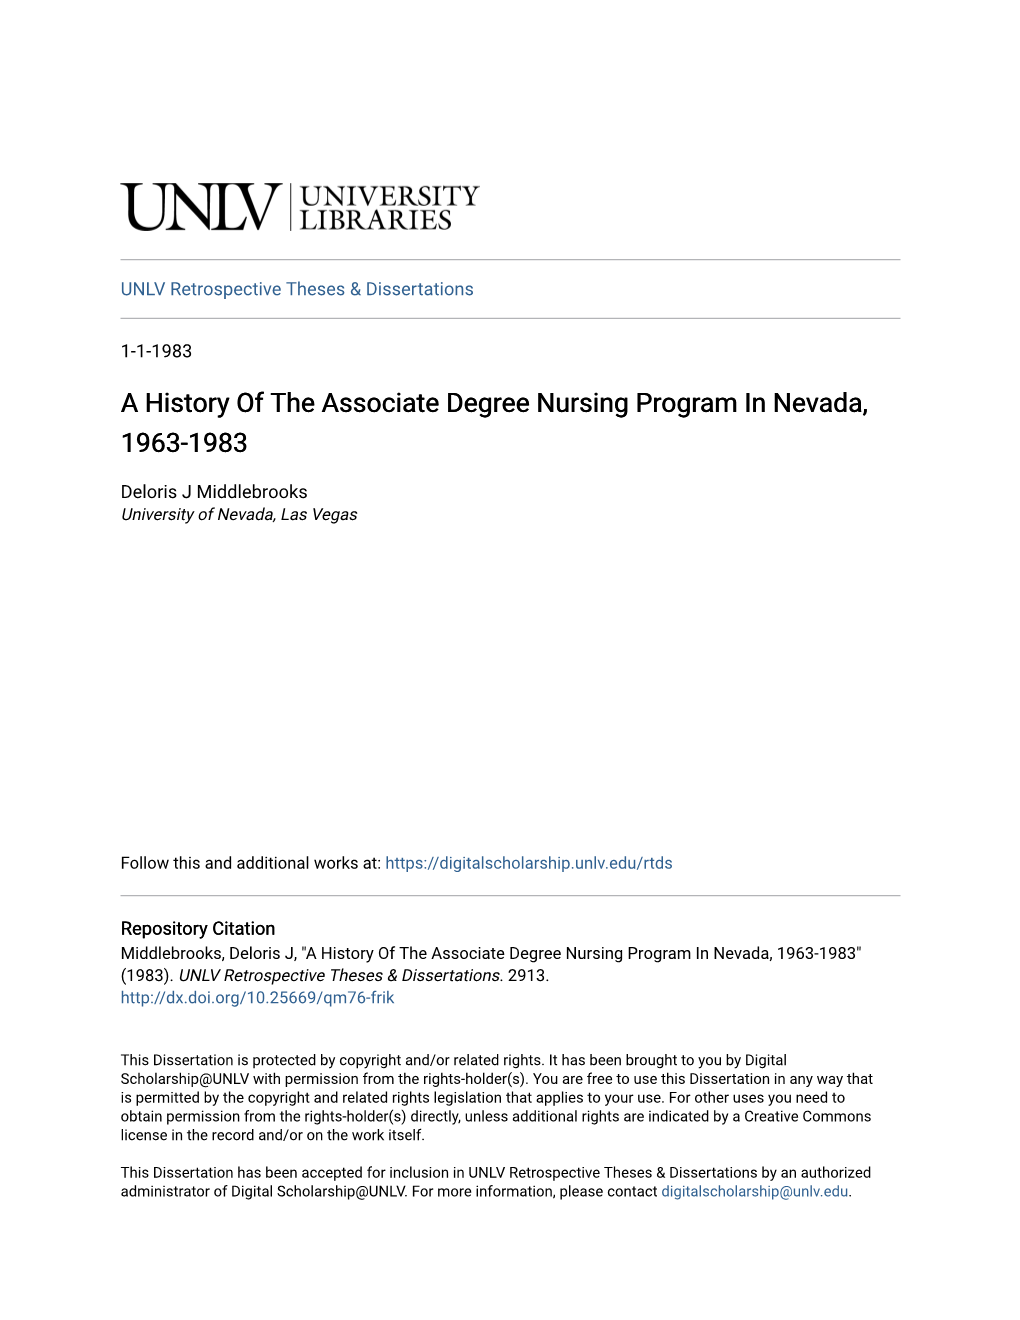 A History of the Associate Degree Nursing Program in Nevada, 1963-1983